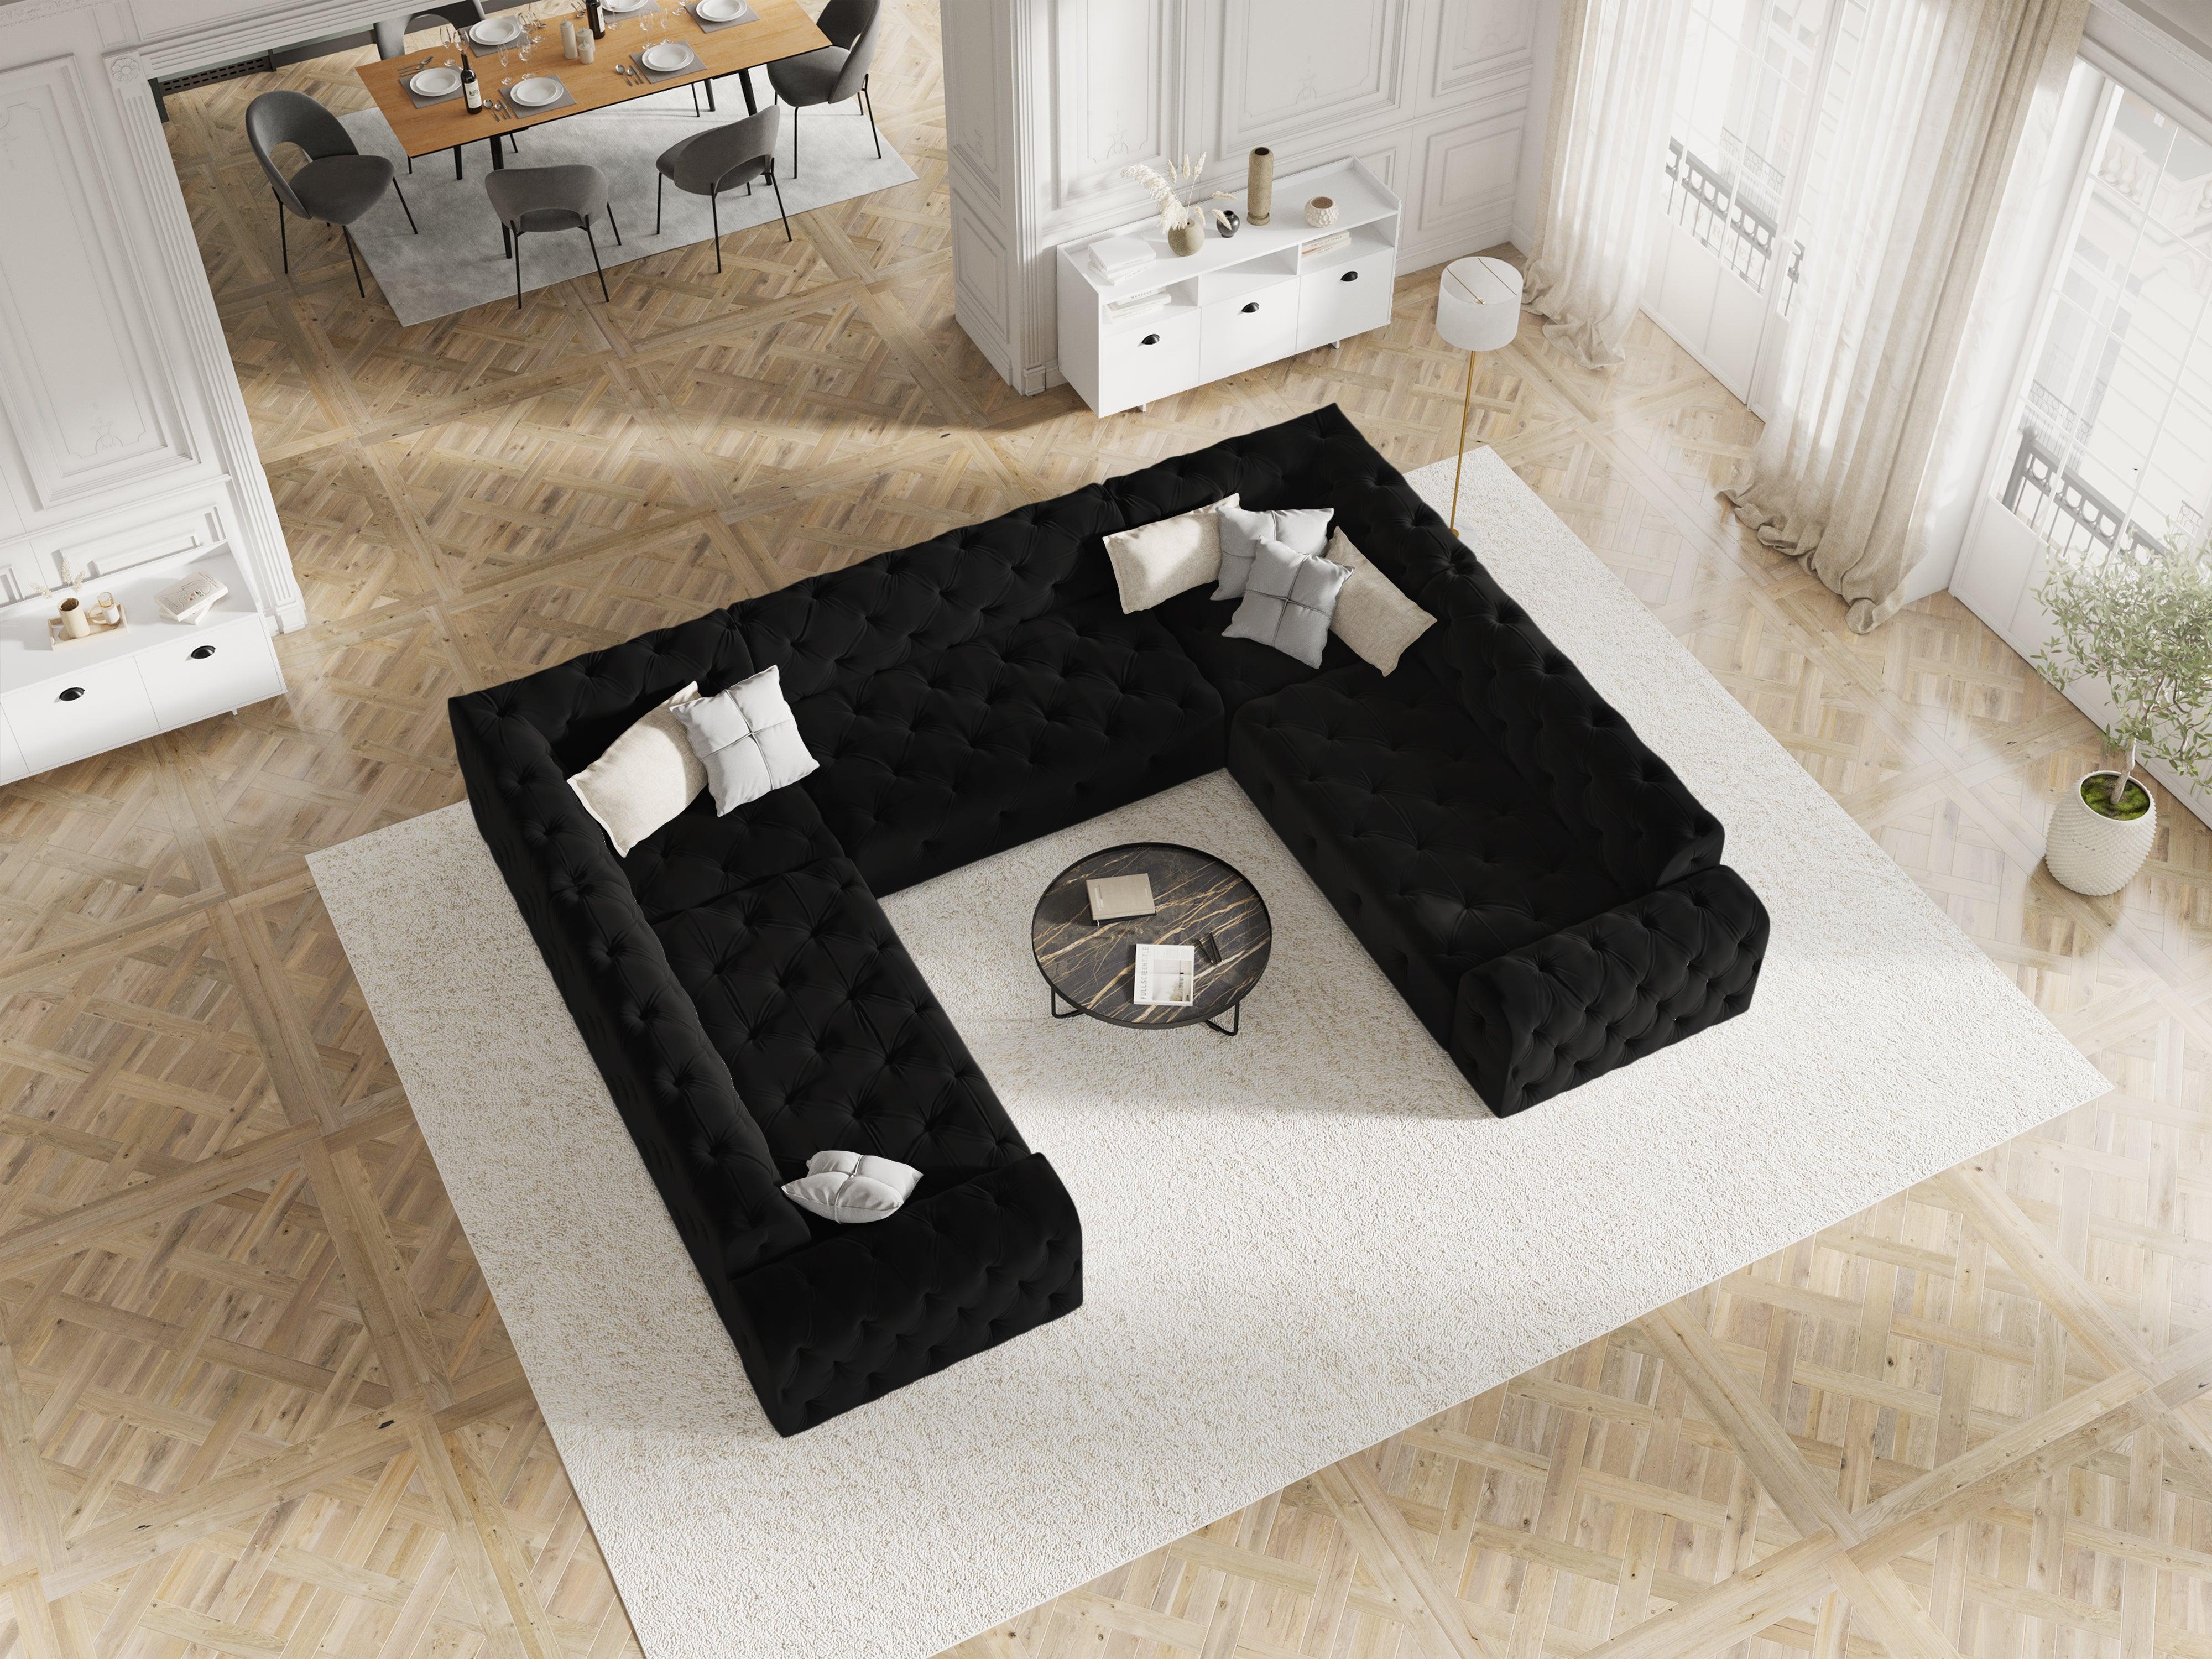 Velvet Panoramic Sofa, "Candice", 8 Seats, 318x254x80
Made in Europe, Micadoni, Eye on Design